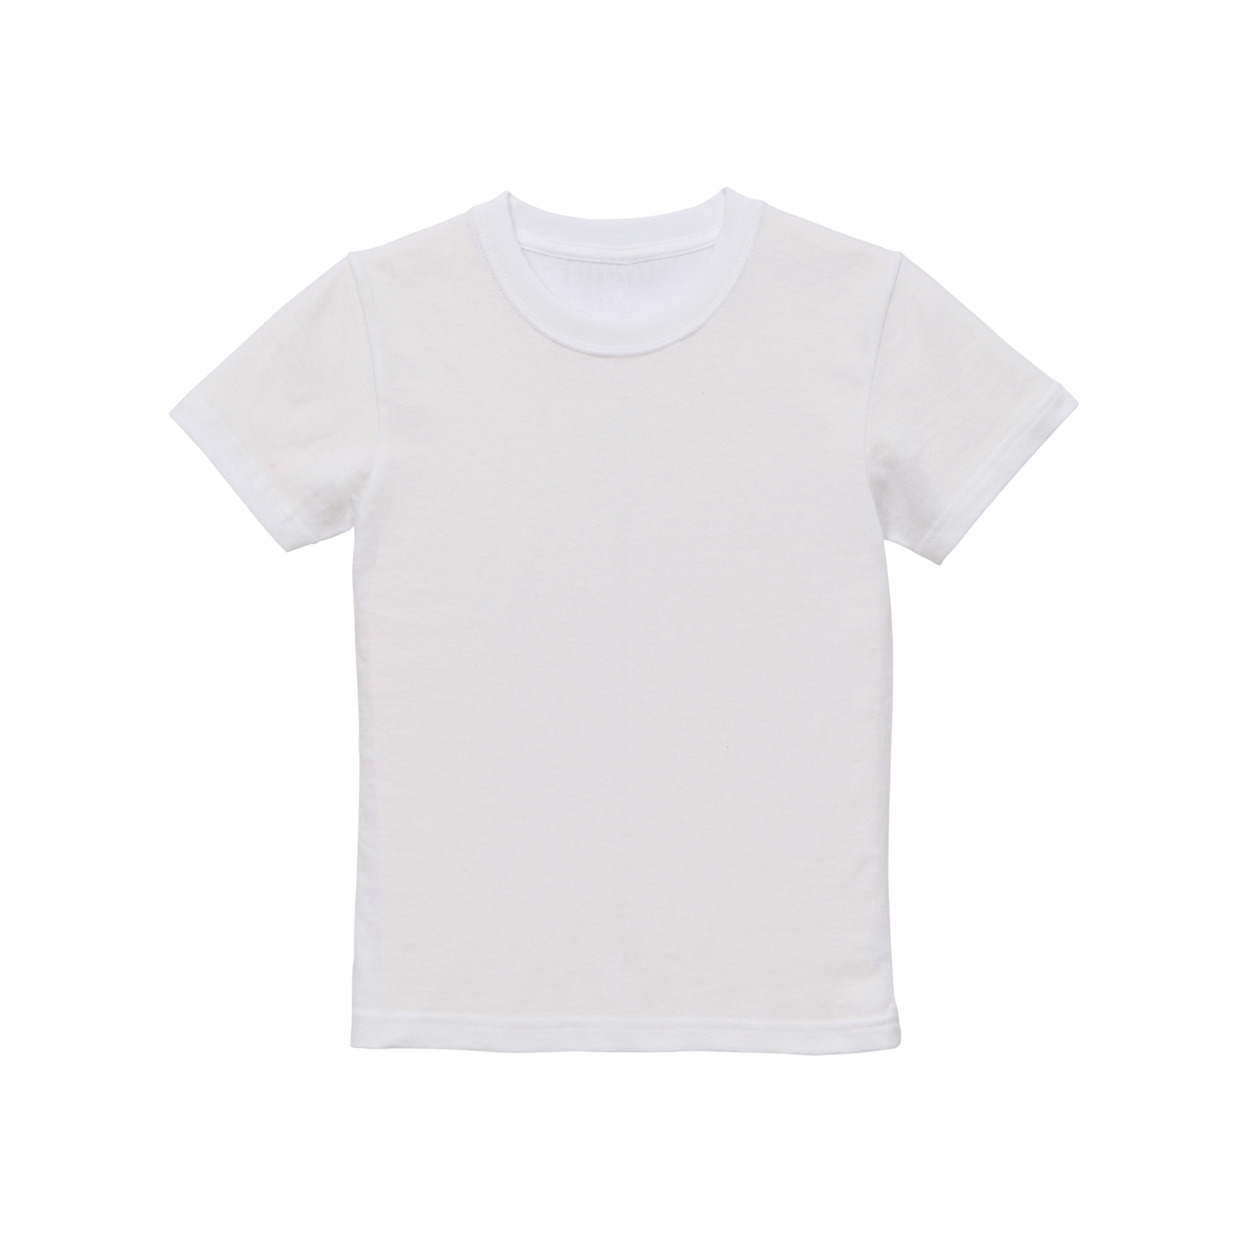 Tシャツ(Jr-size)